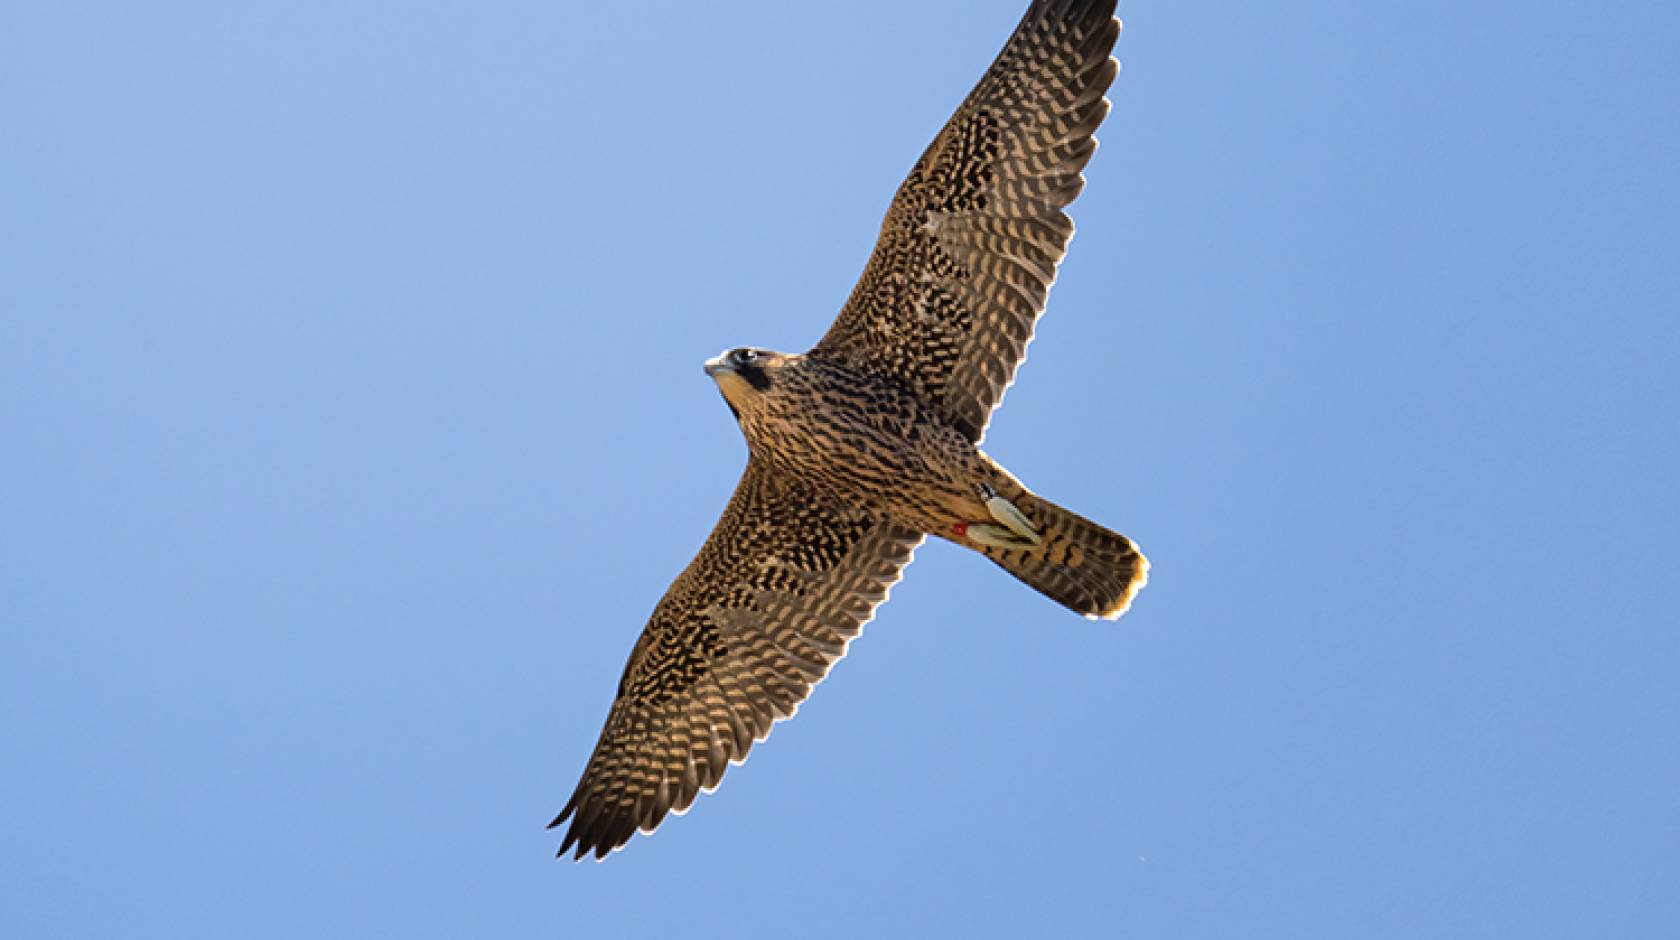 Fauci, a young peregrin falcon, takes flight